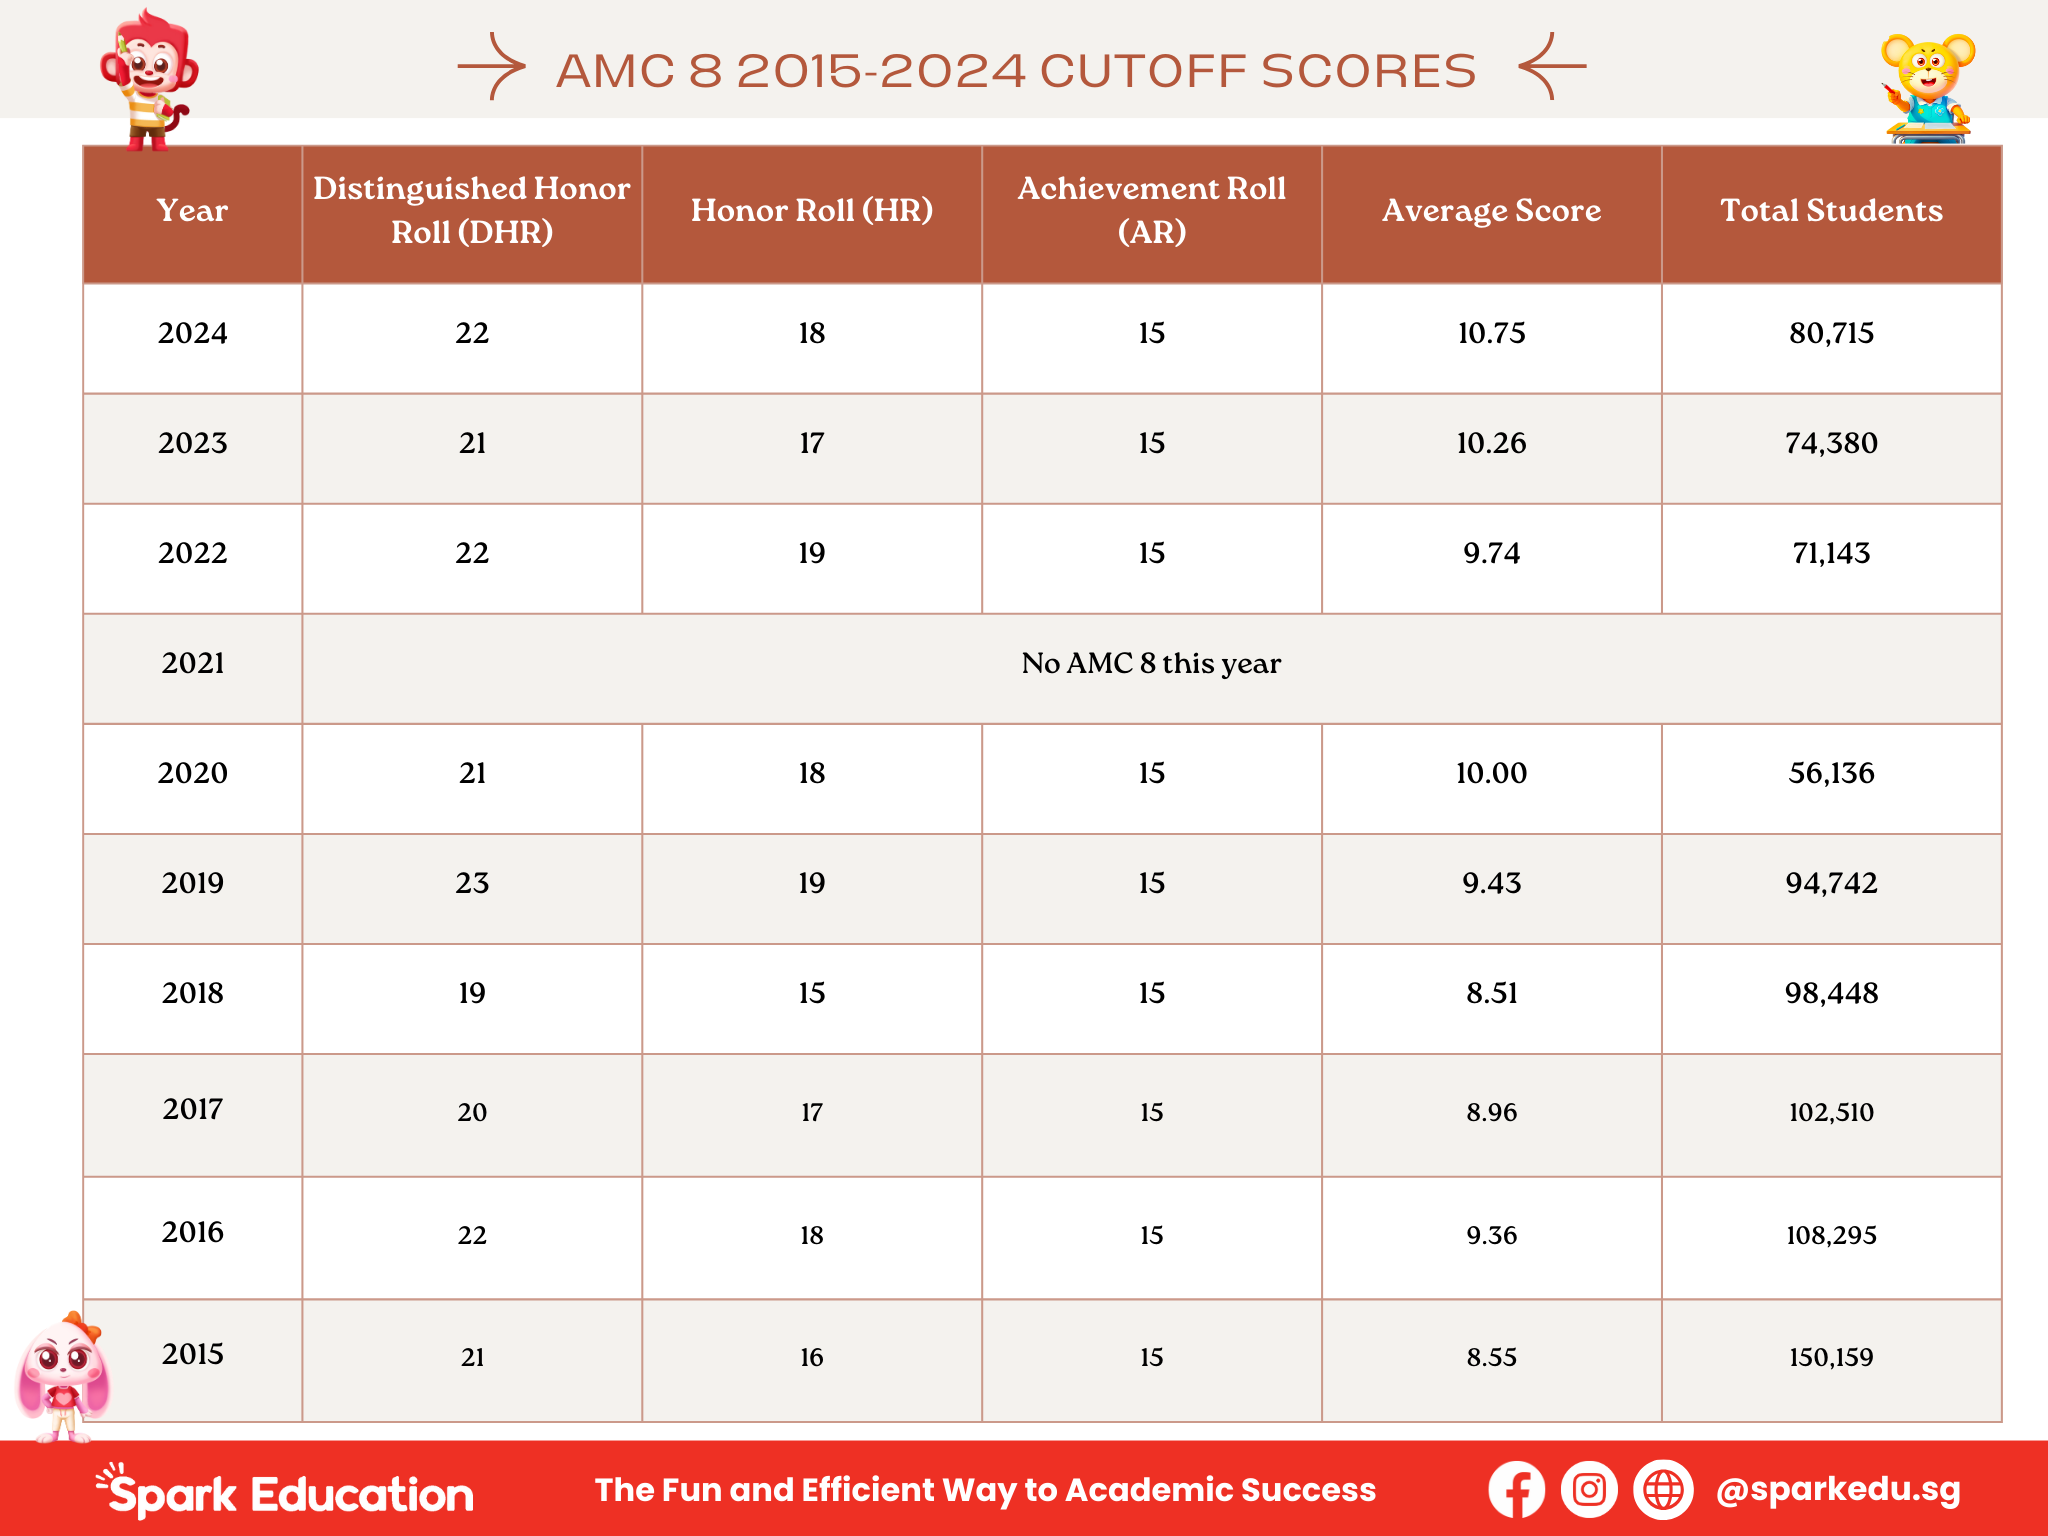 AMC 8 2015-2024 Cutoff Scores Worldwide